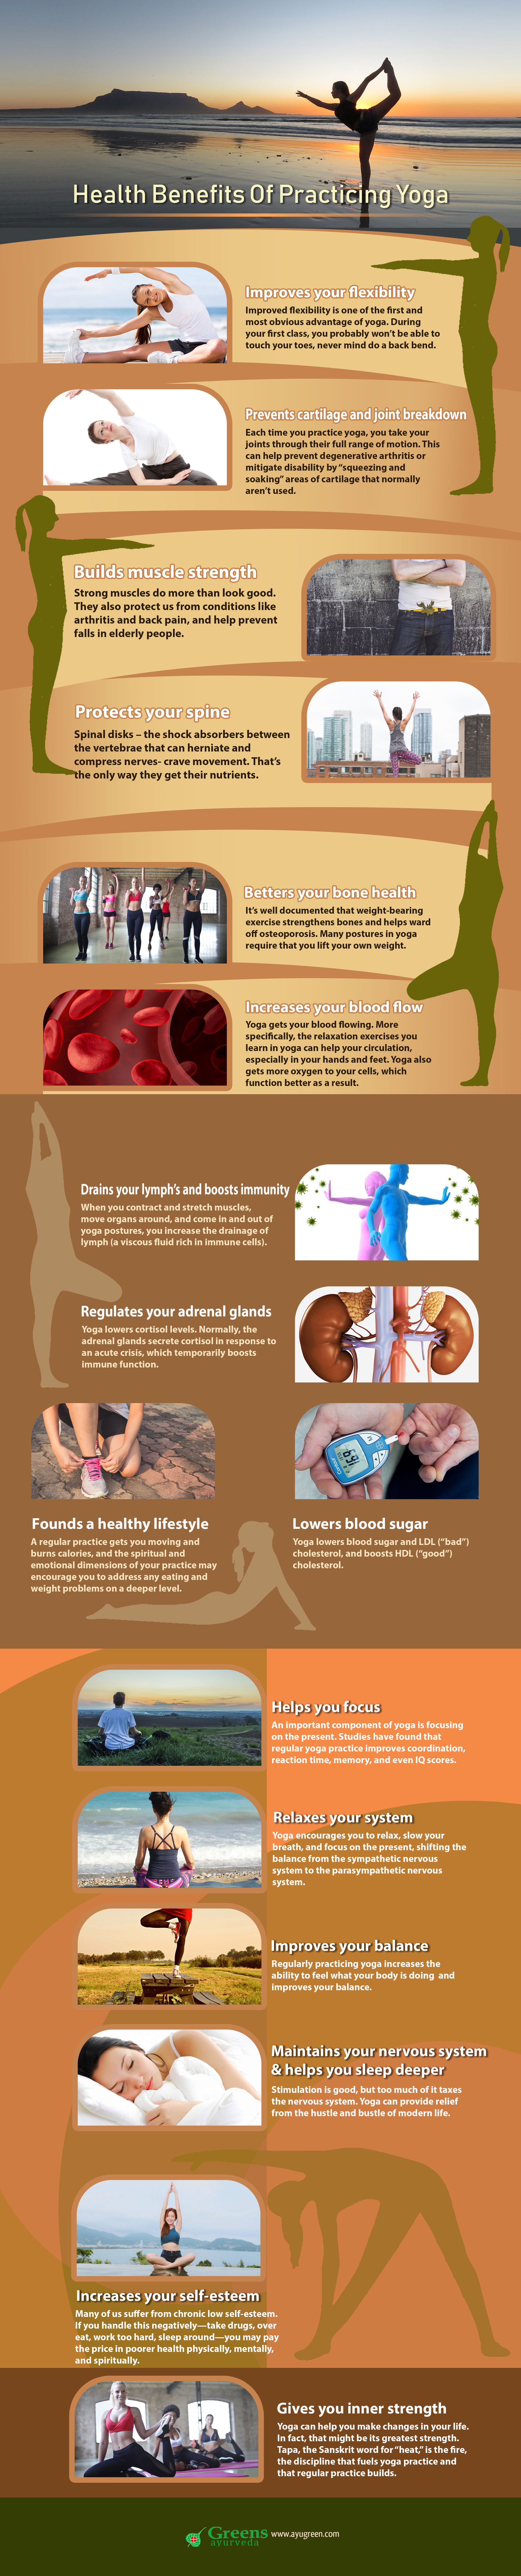 health benefits of practicing yoga